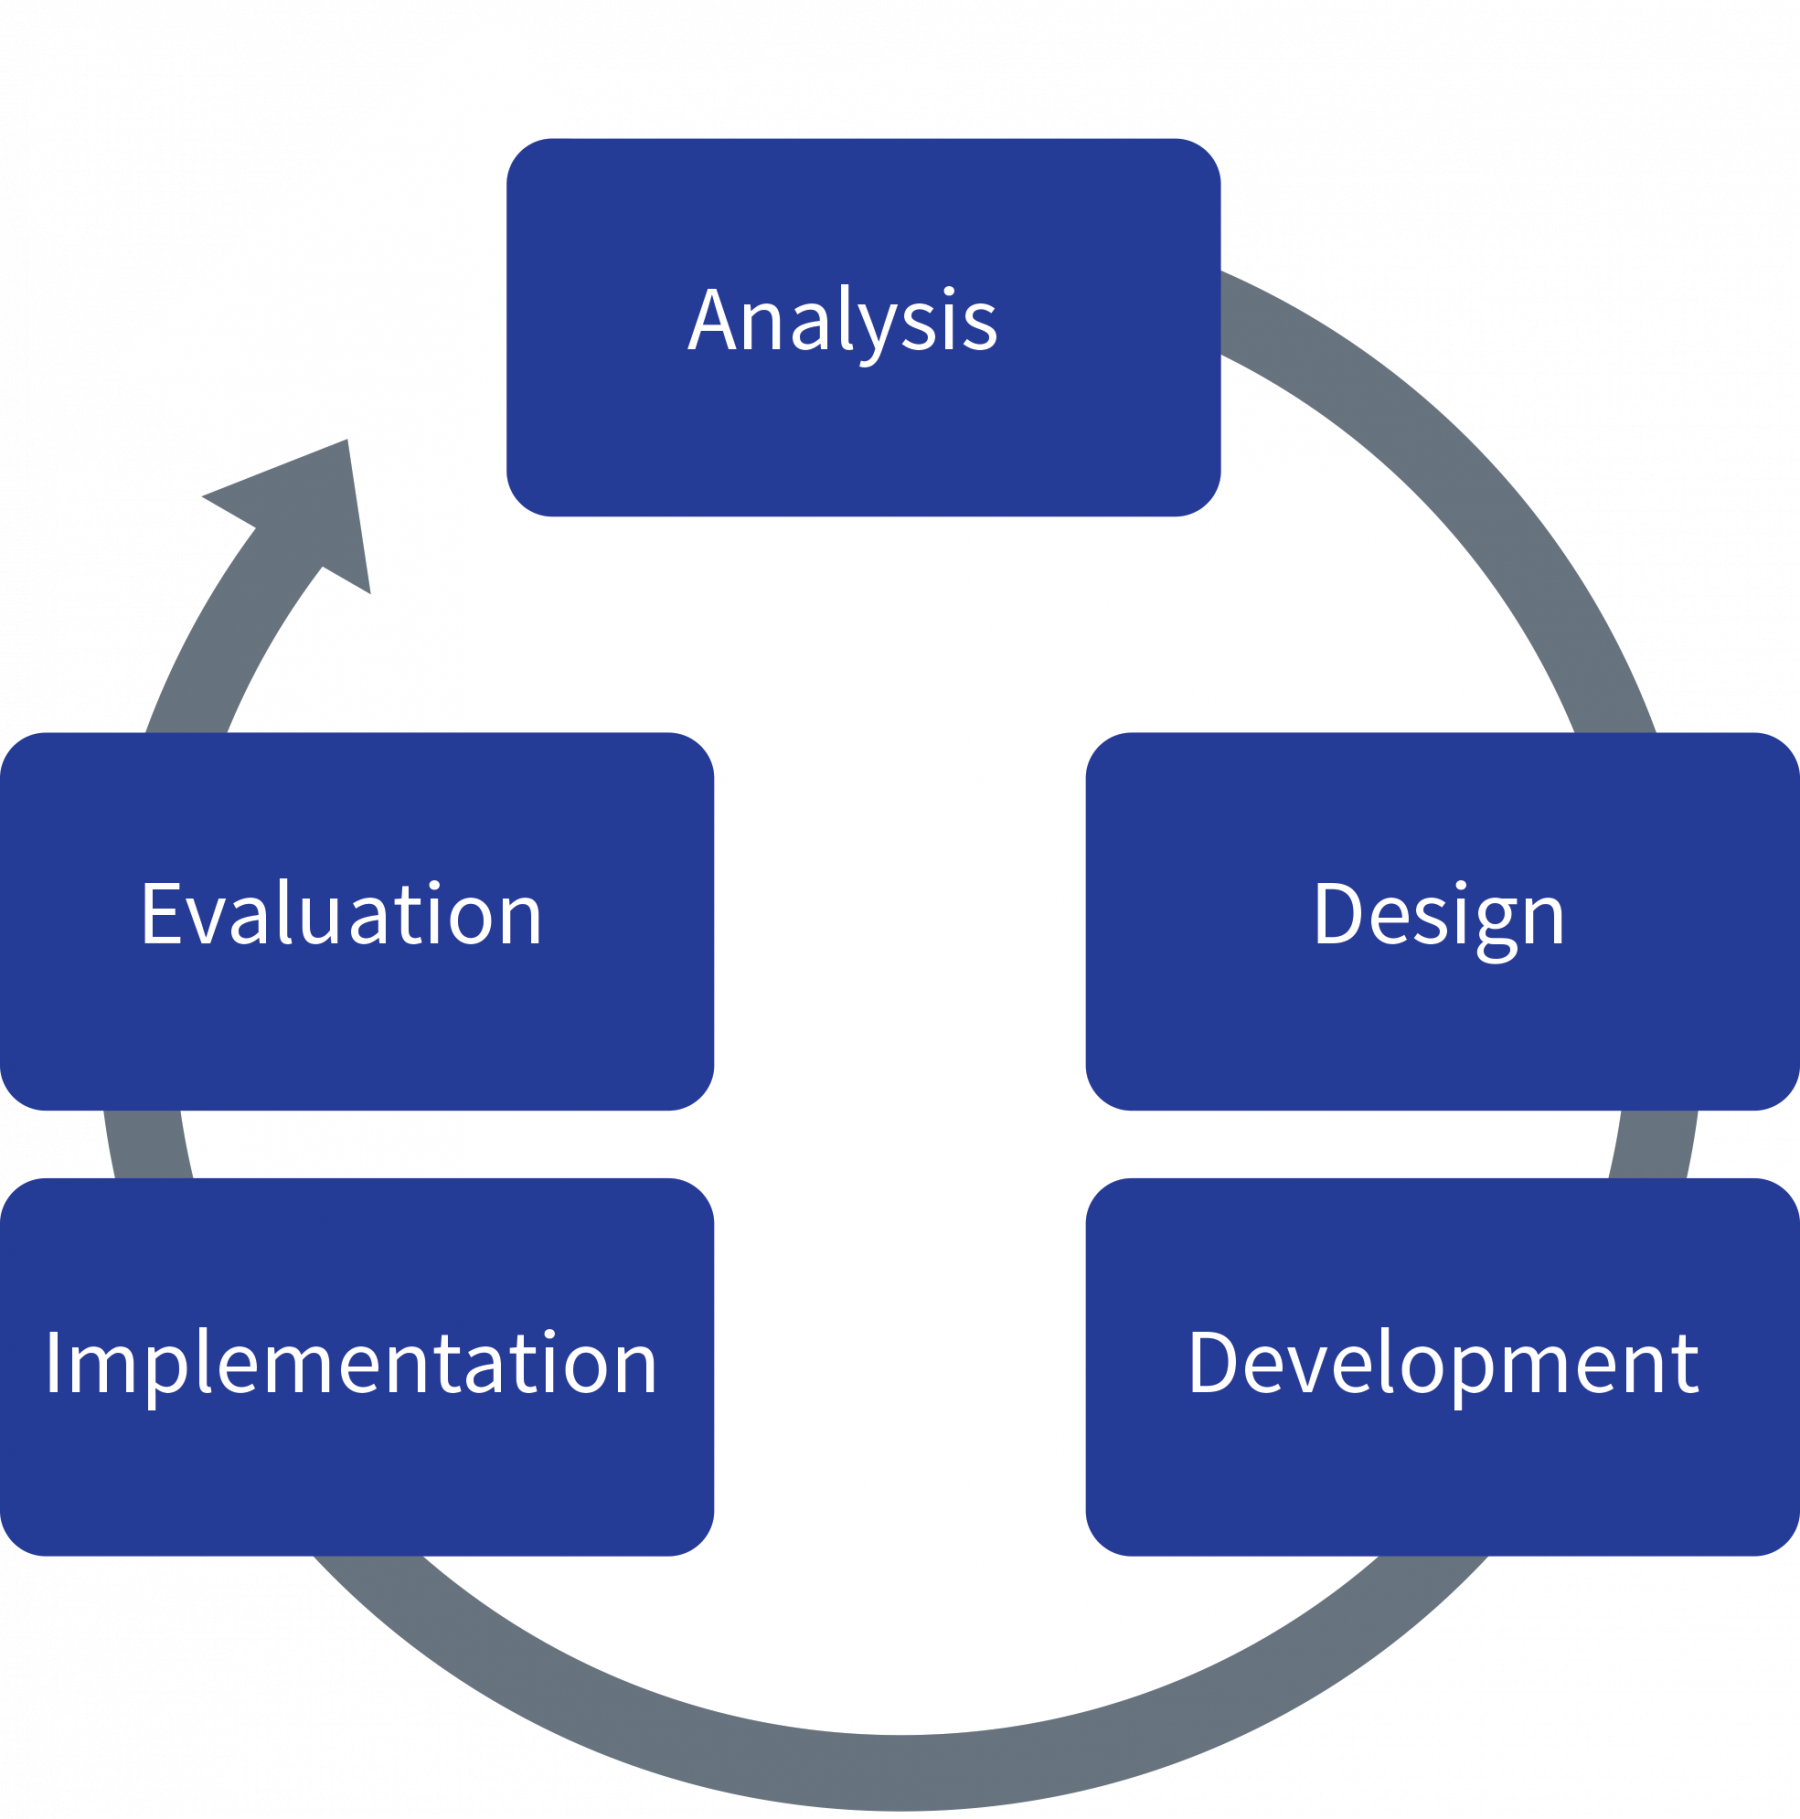 ADDIE Model of Instructional Design